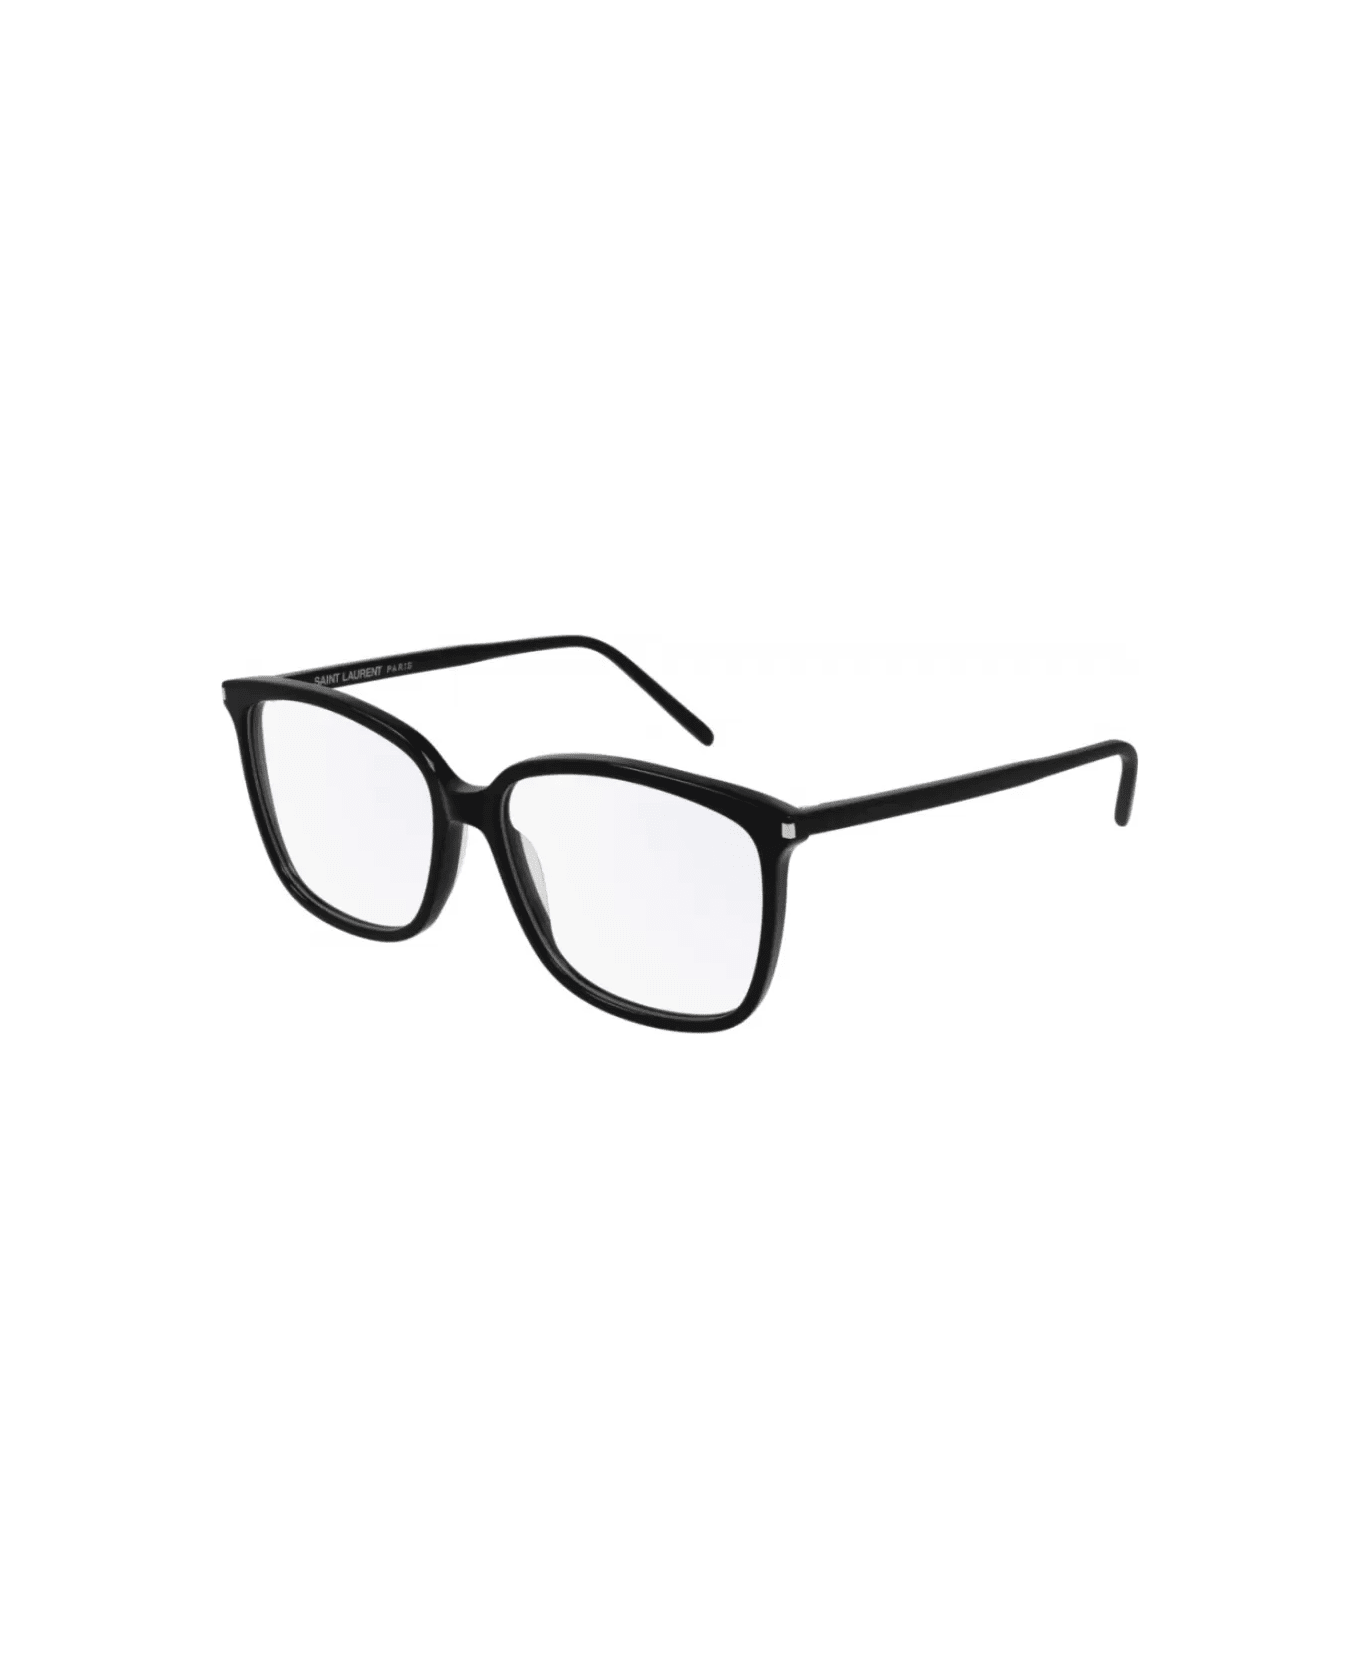 Saint Laurent Eyewear SL 453 001 Glasses - Nero